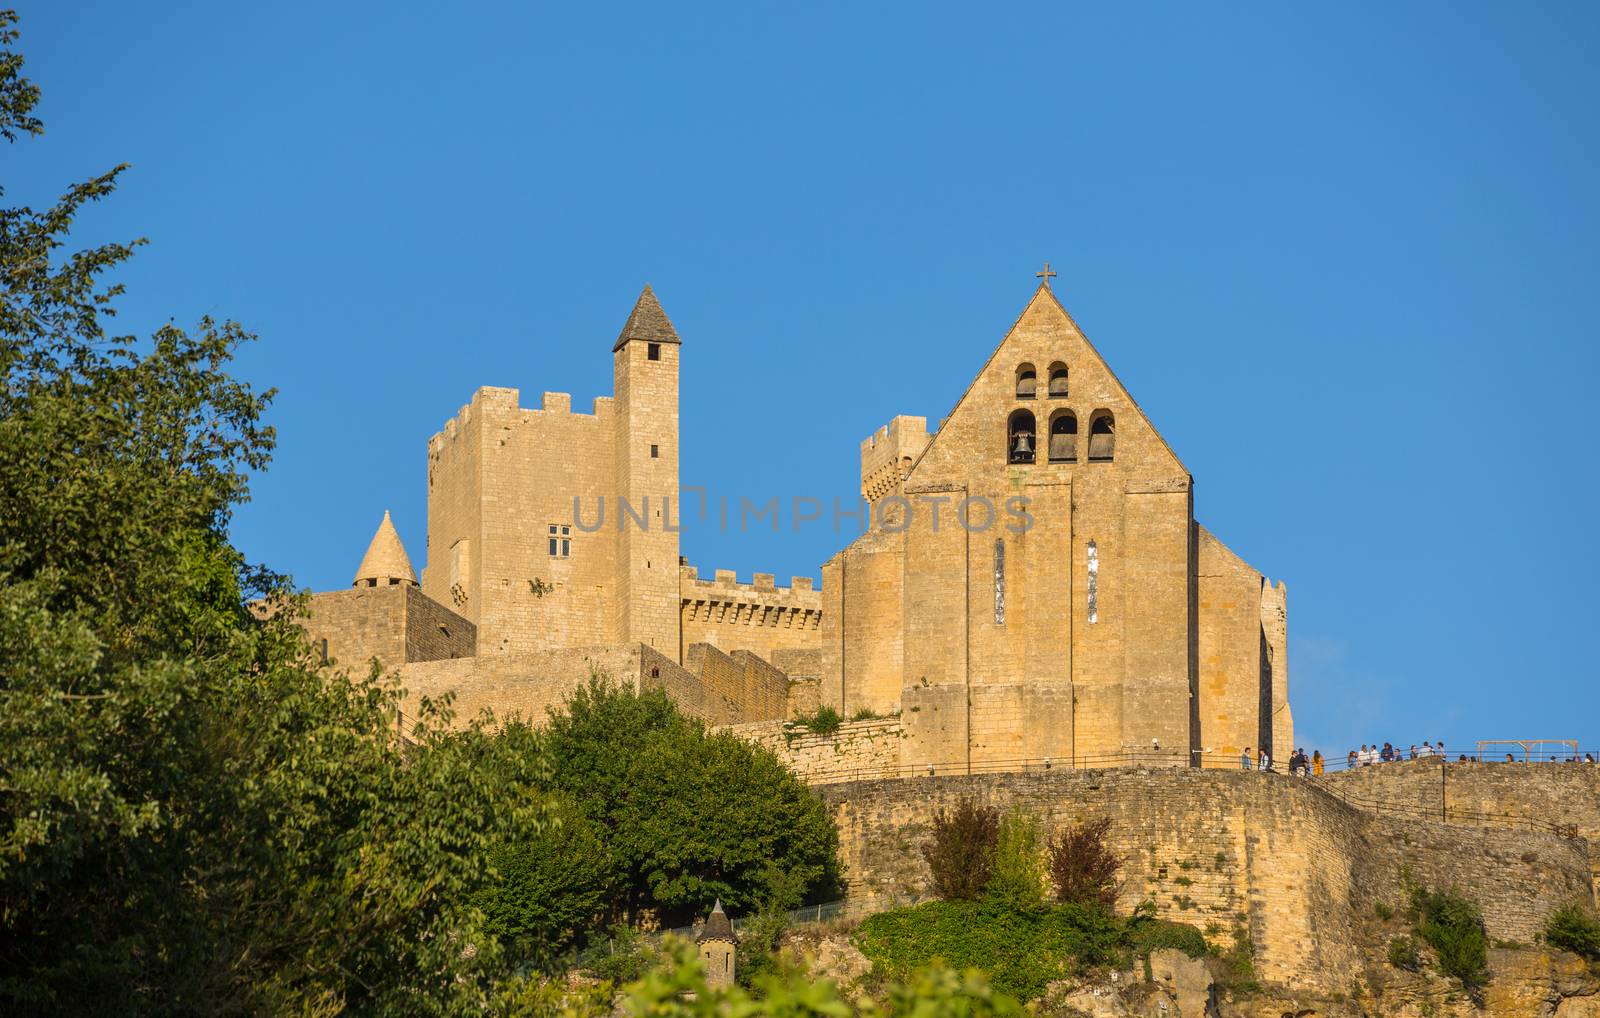 Beynac-et-Cazenac, France: The medieval Chateau de Beynac rising on a limestone cliff above the Dordogne River. Dordogne department, Beynac-et-Cazenac